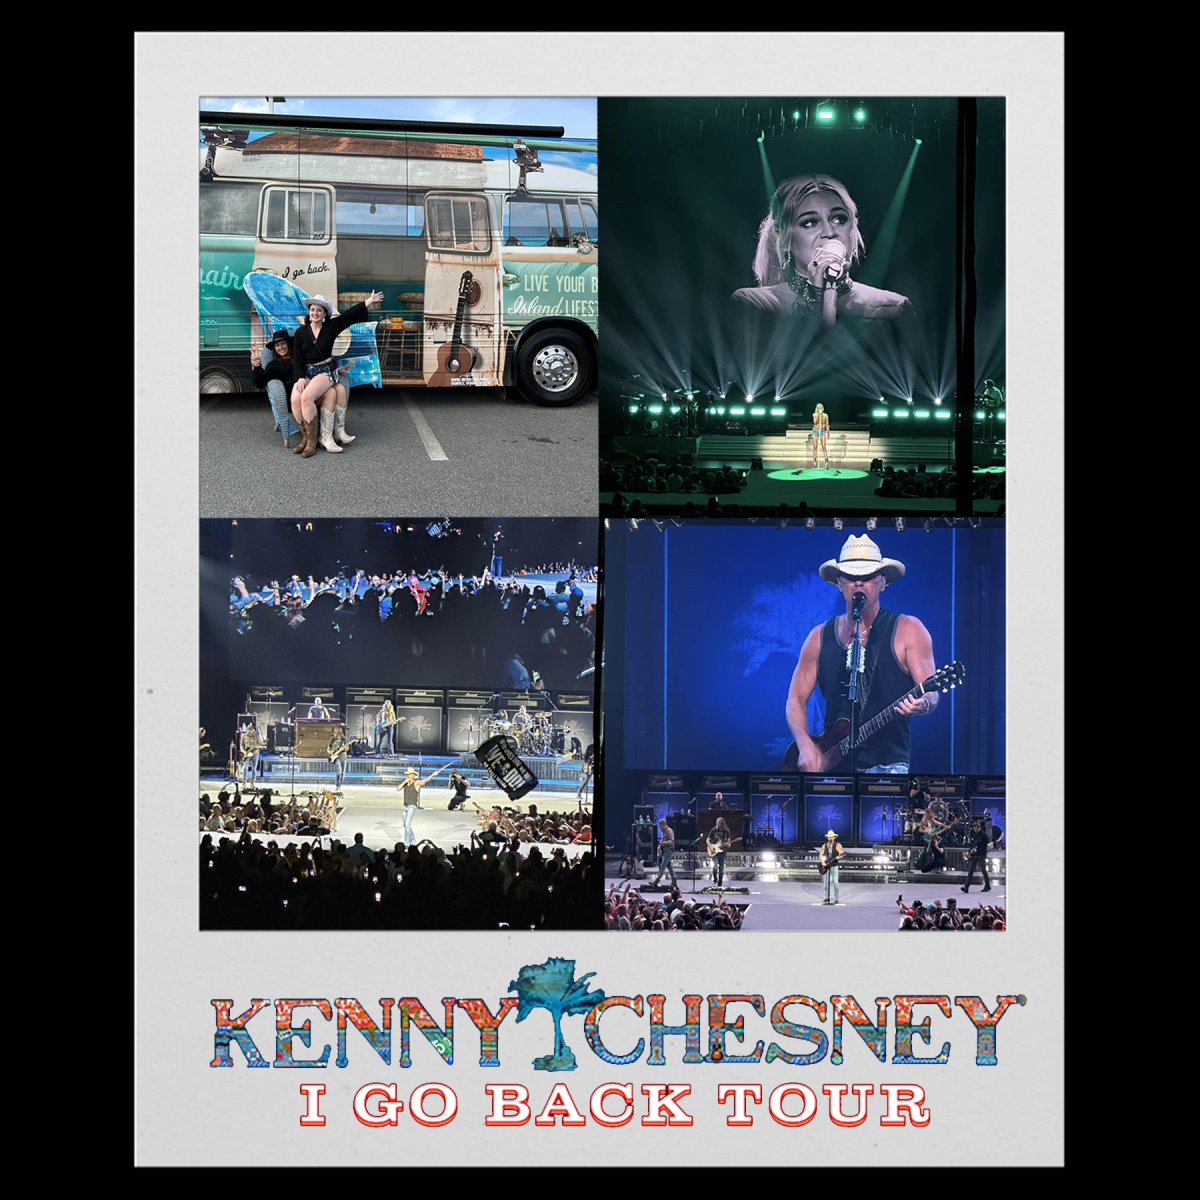 Concert Adventures: Kenny Chesney’s “I Go Back” Tour